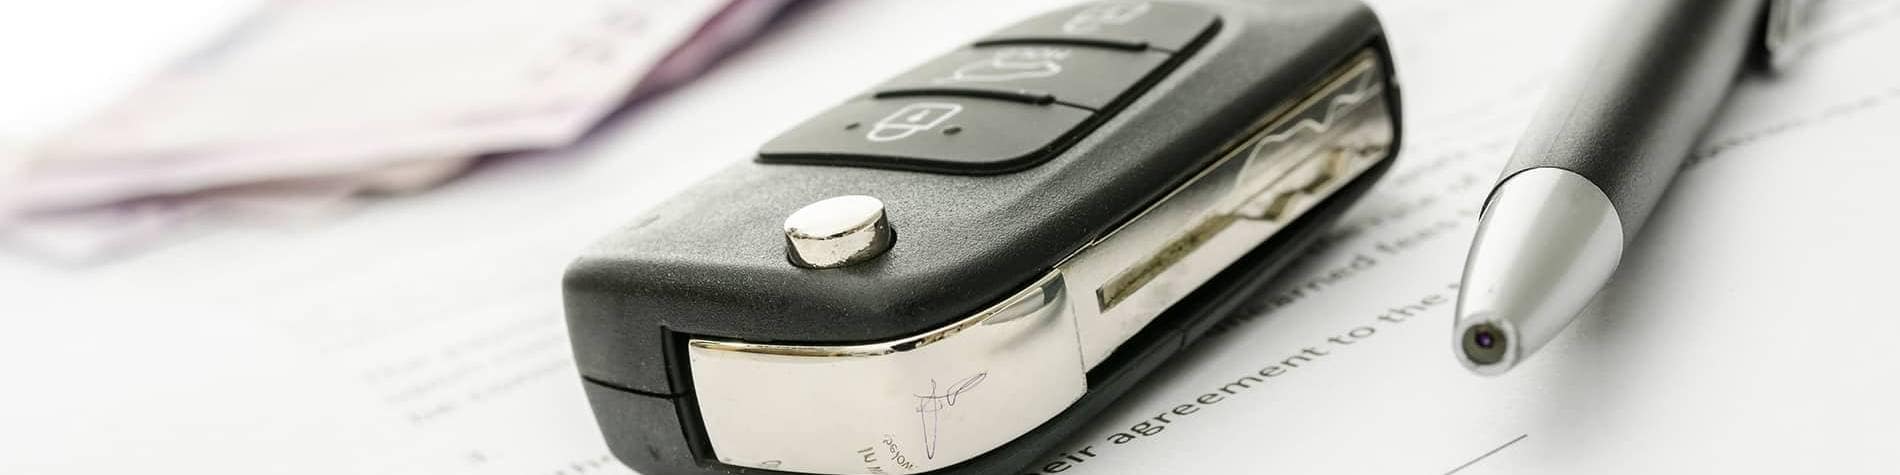 Car keys on top of an auto finance agreement 